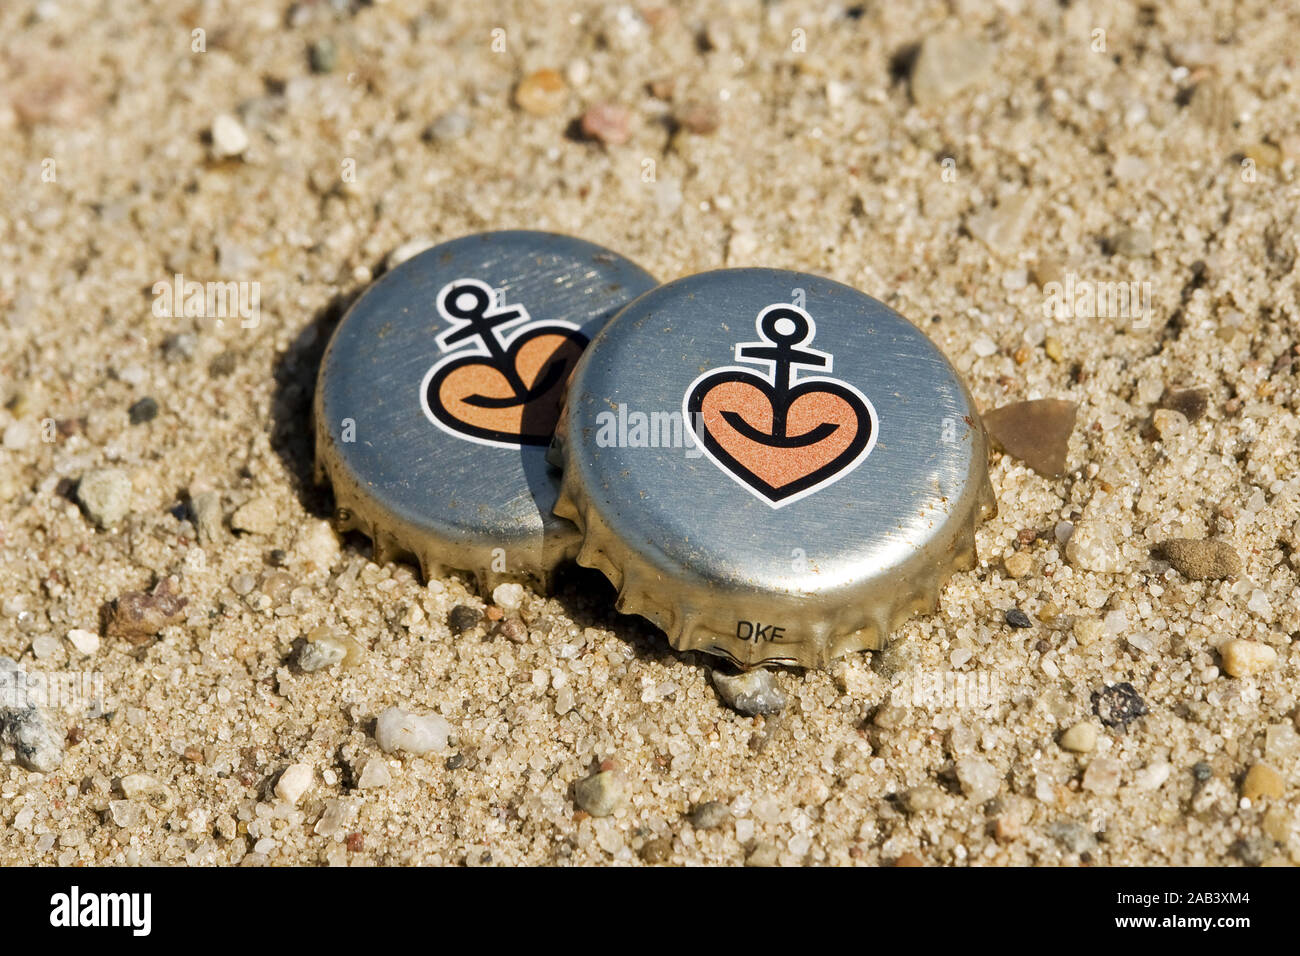 Zwei Astra-Kronkorken am Strand |Two Astra crown corks on the beach| Stock Photo